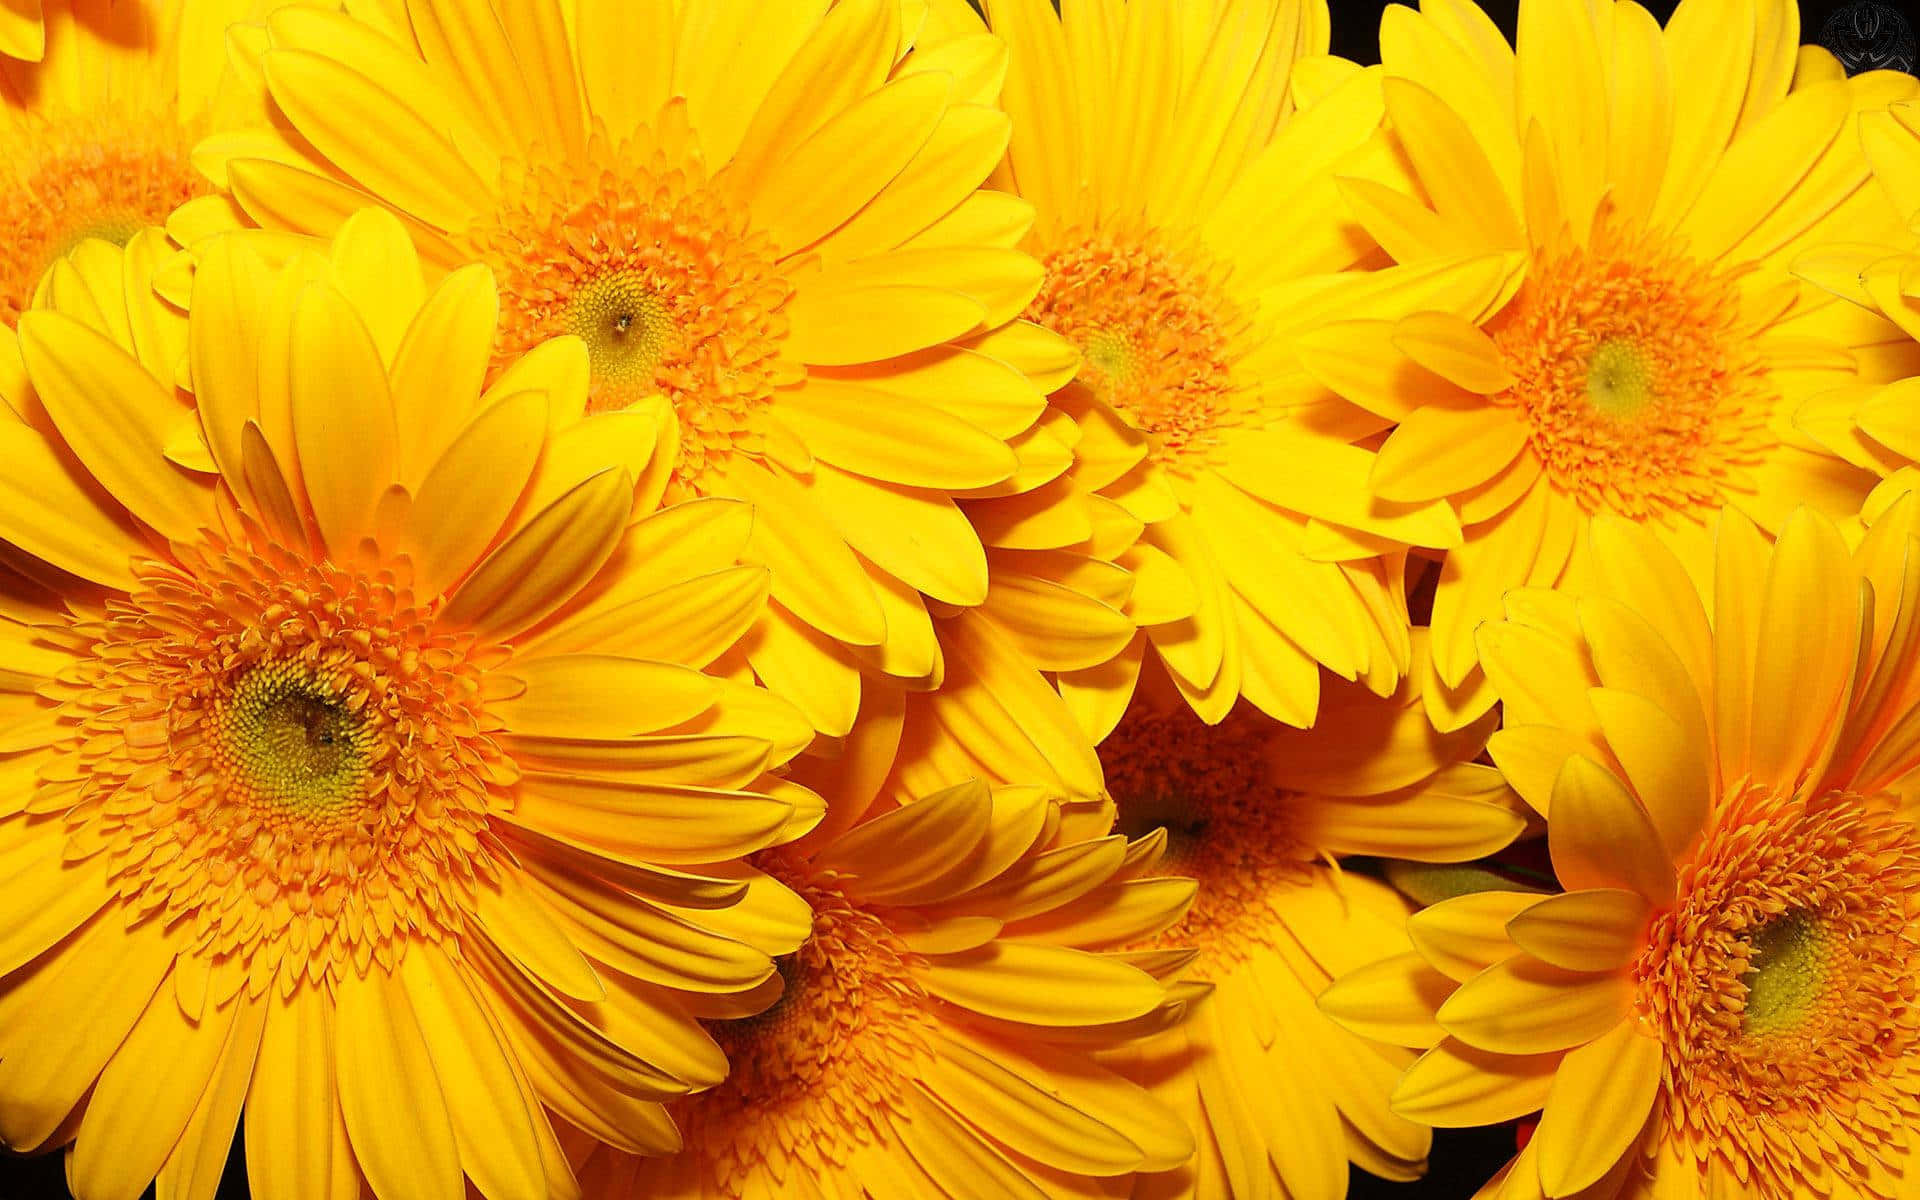 Aesthetic yellow daisy flower against a blue sky Wallpaper